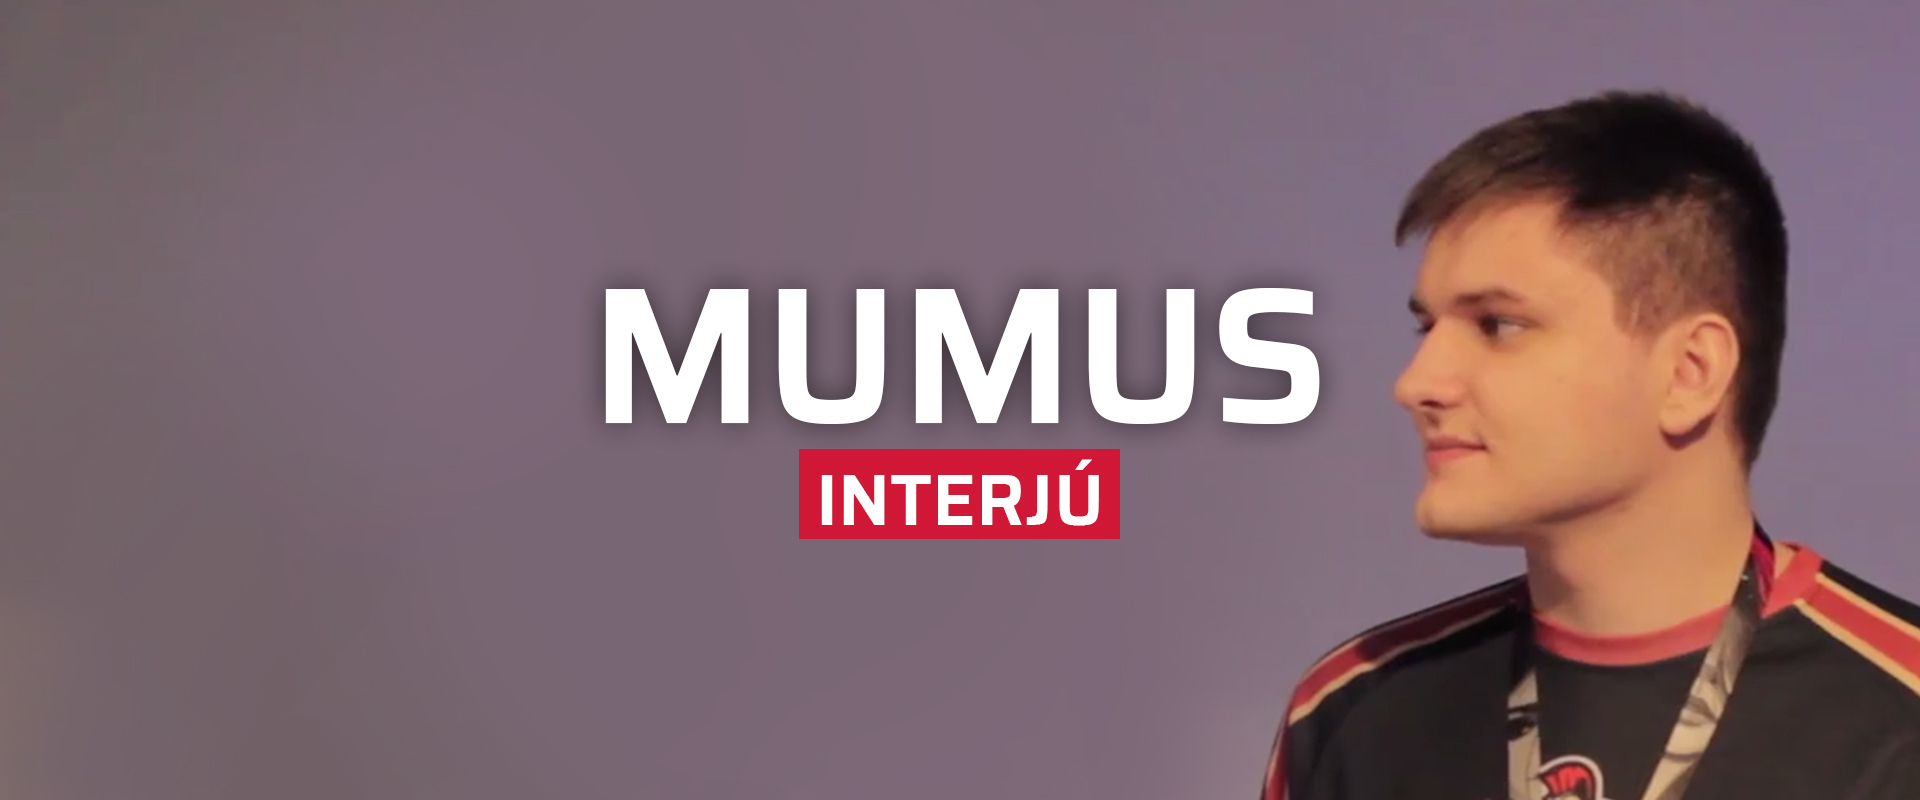 Mumus100: 